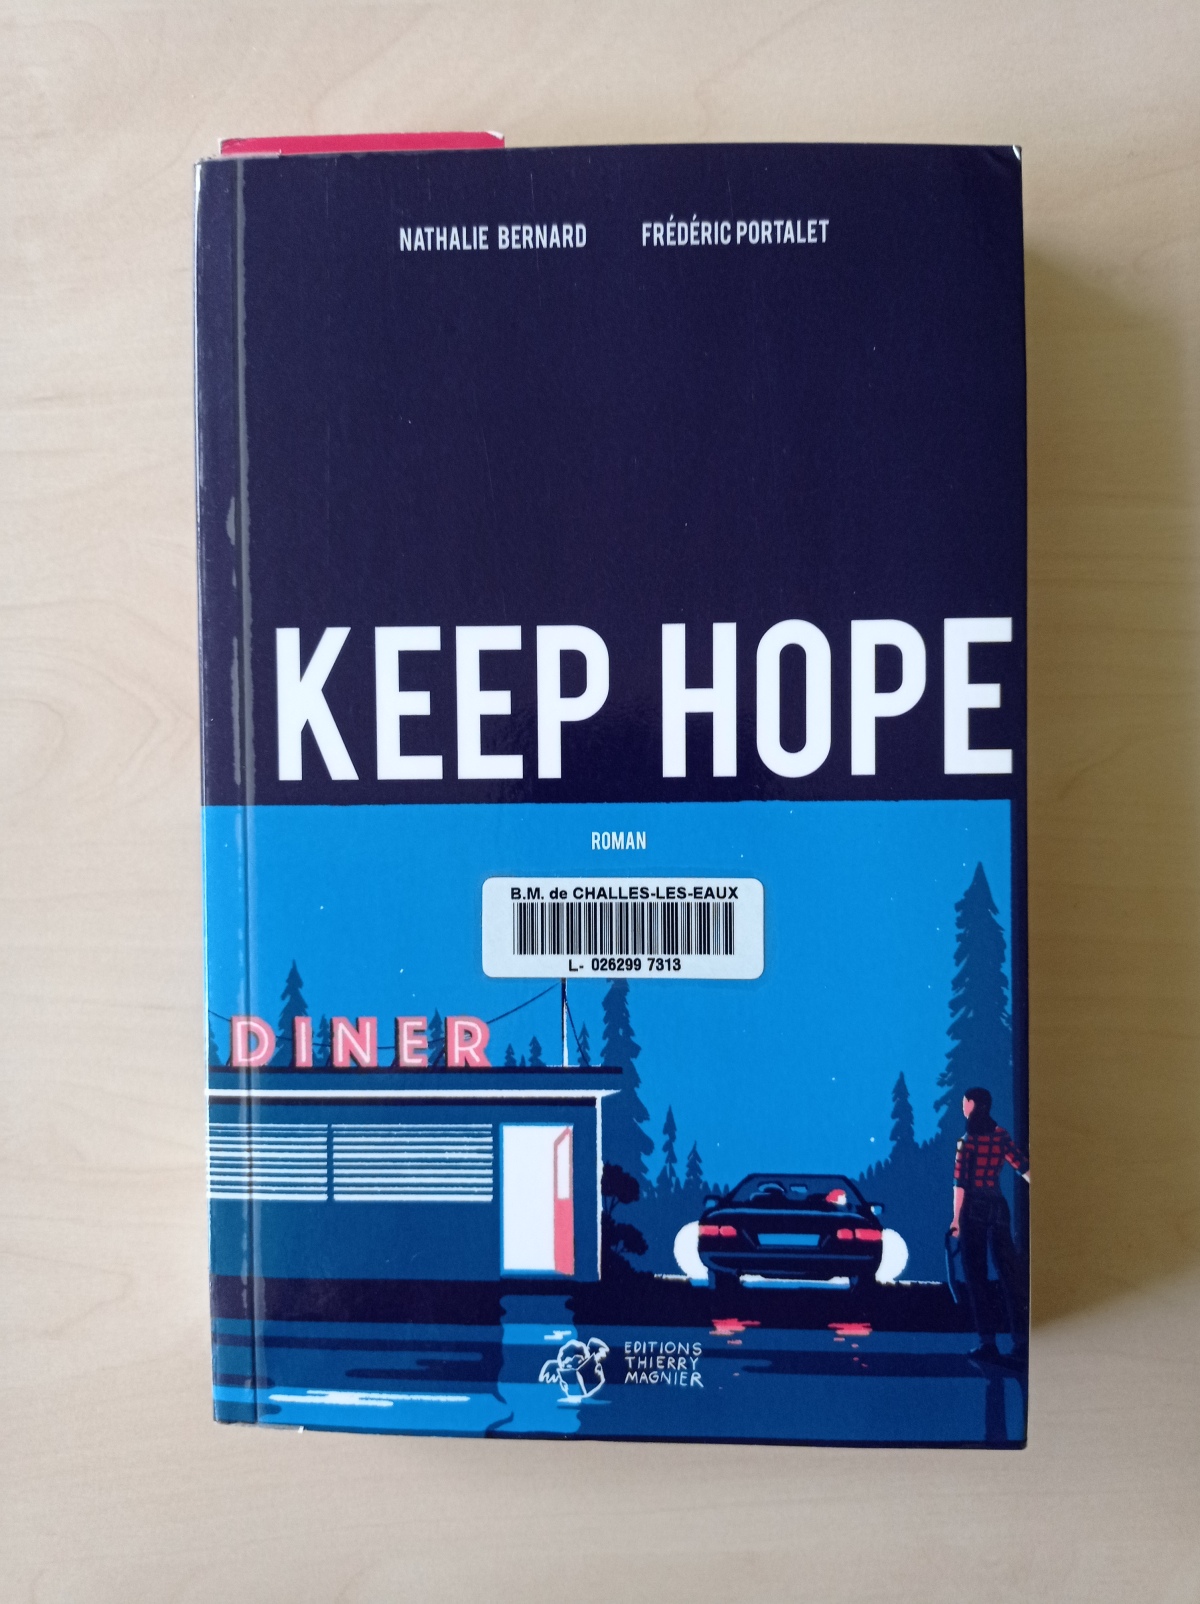 Keep hope / Nathalie Bernard et Frédéric Portalet